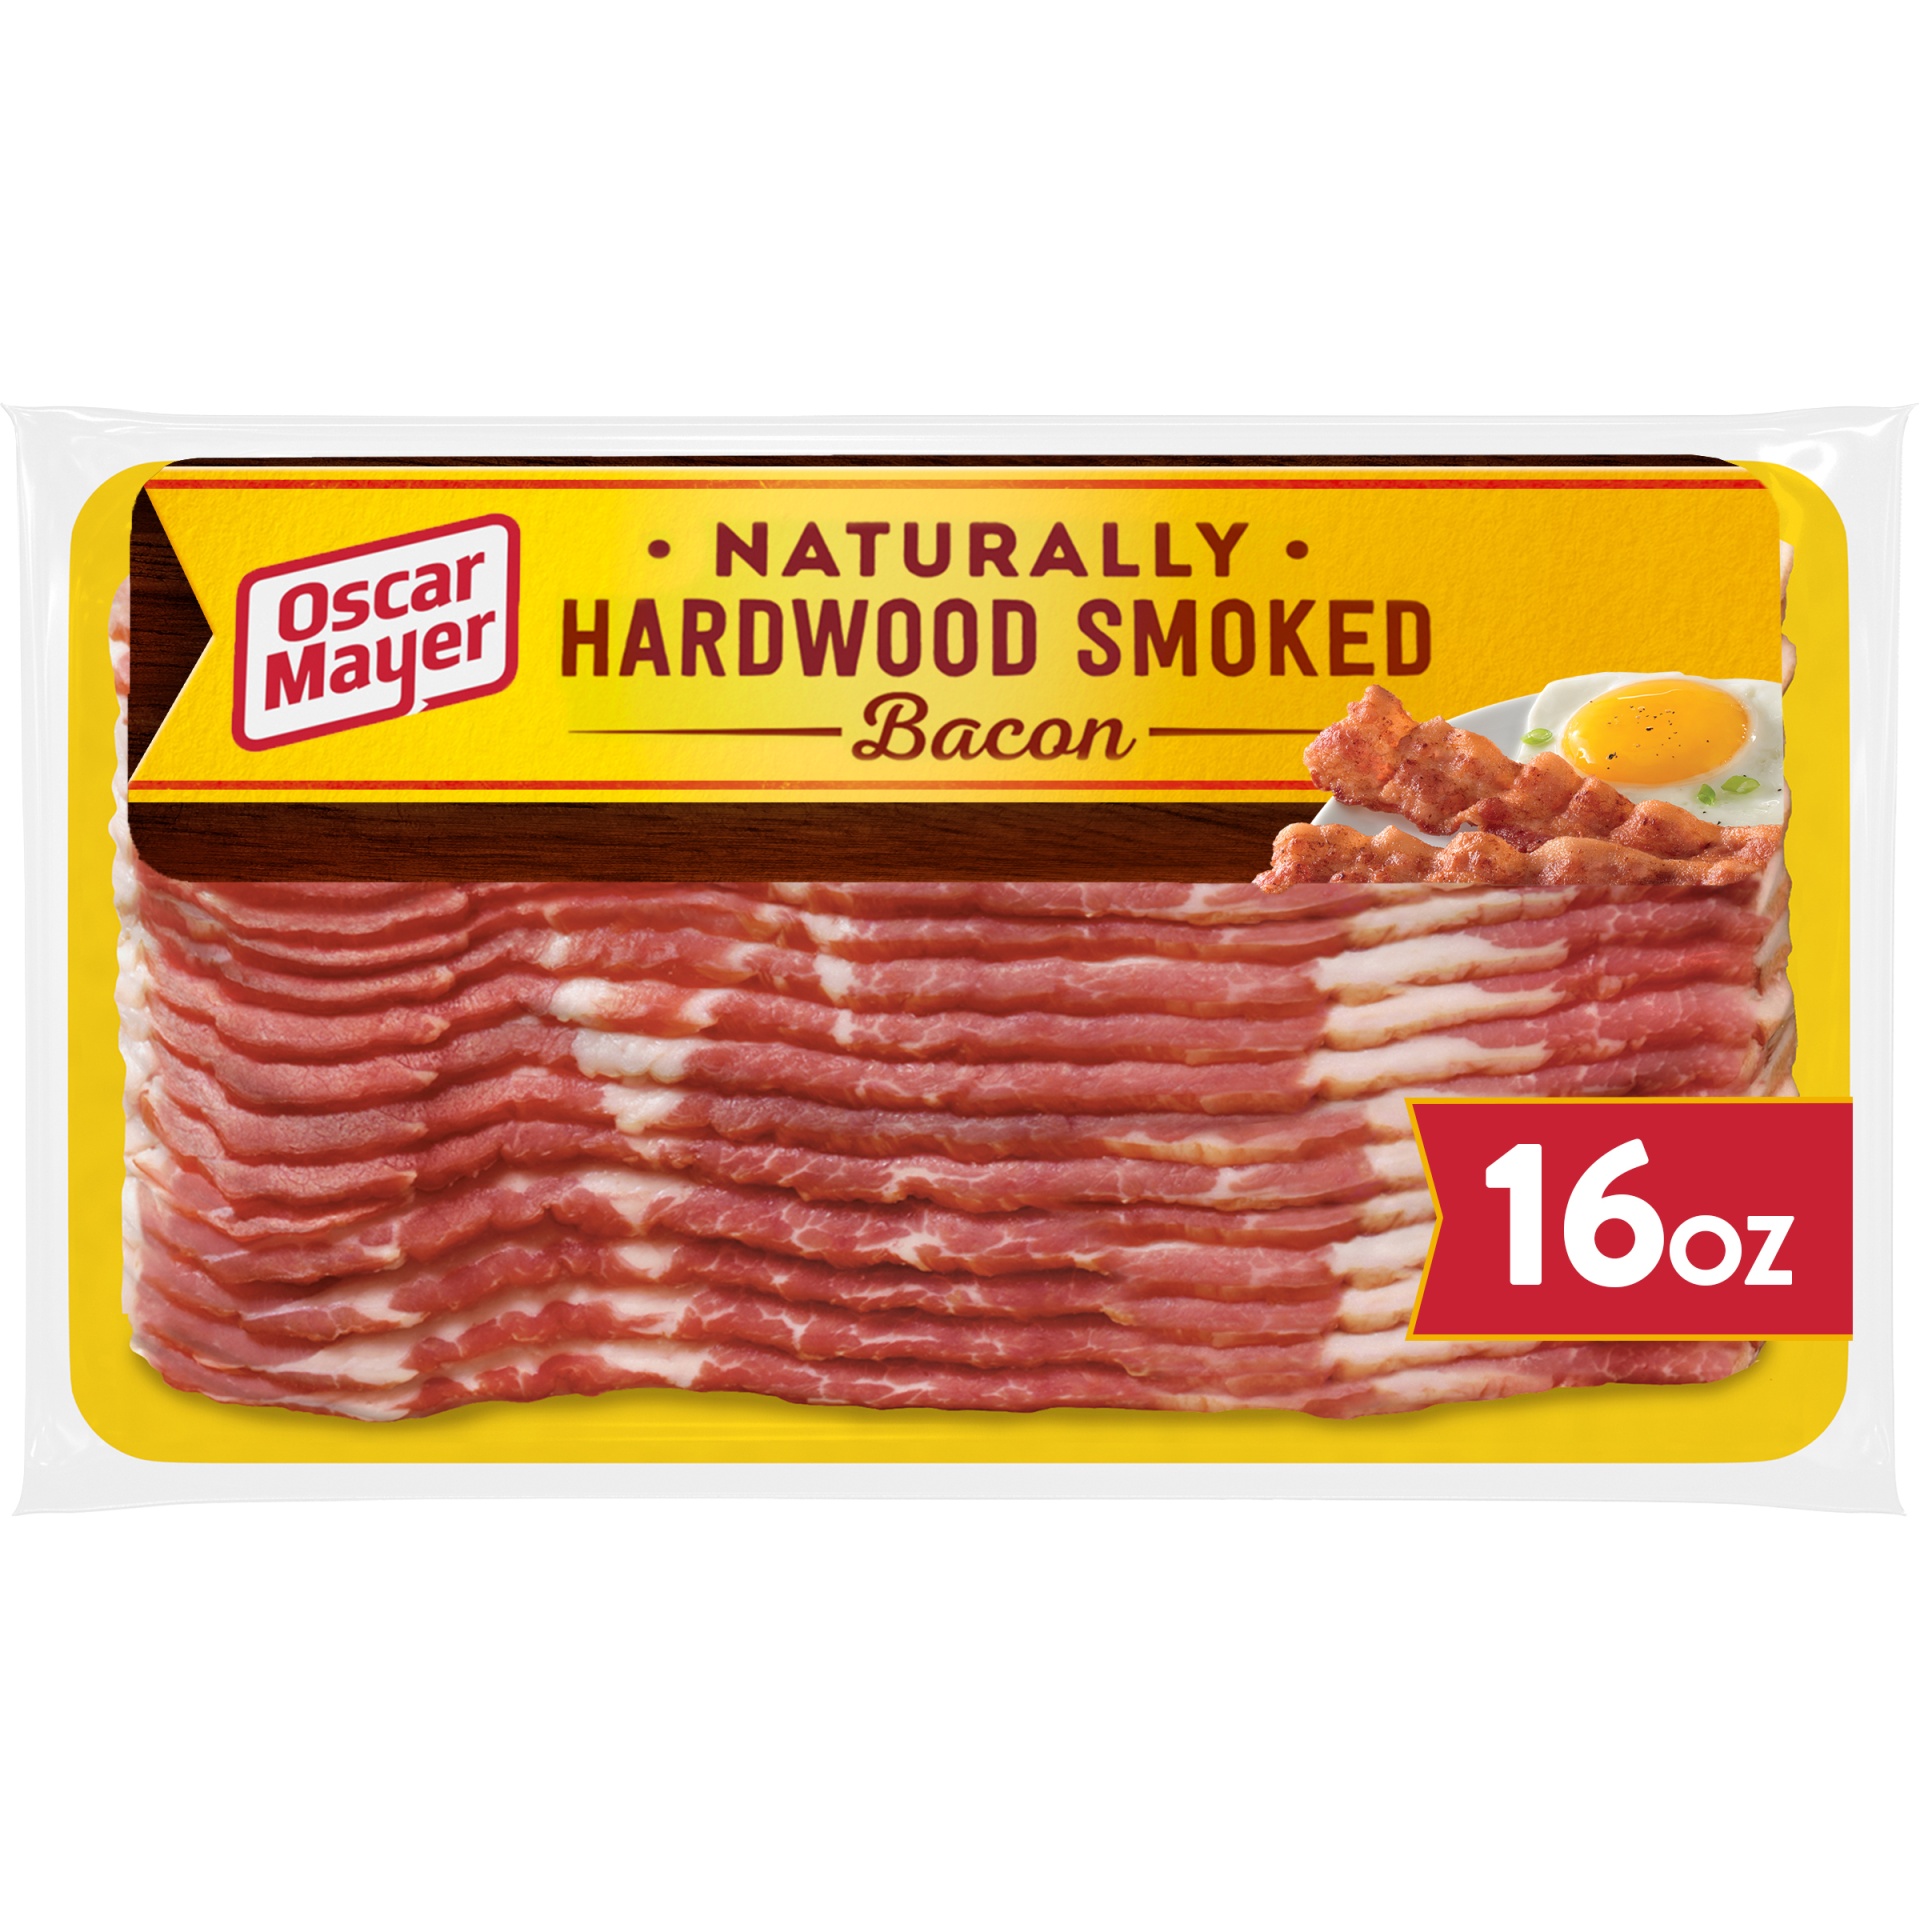 slide 1 of 12, Oscar Mayer Naturally Hardwood Smoked Bacon Pack, 17-19 slices, 16 oz